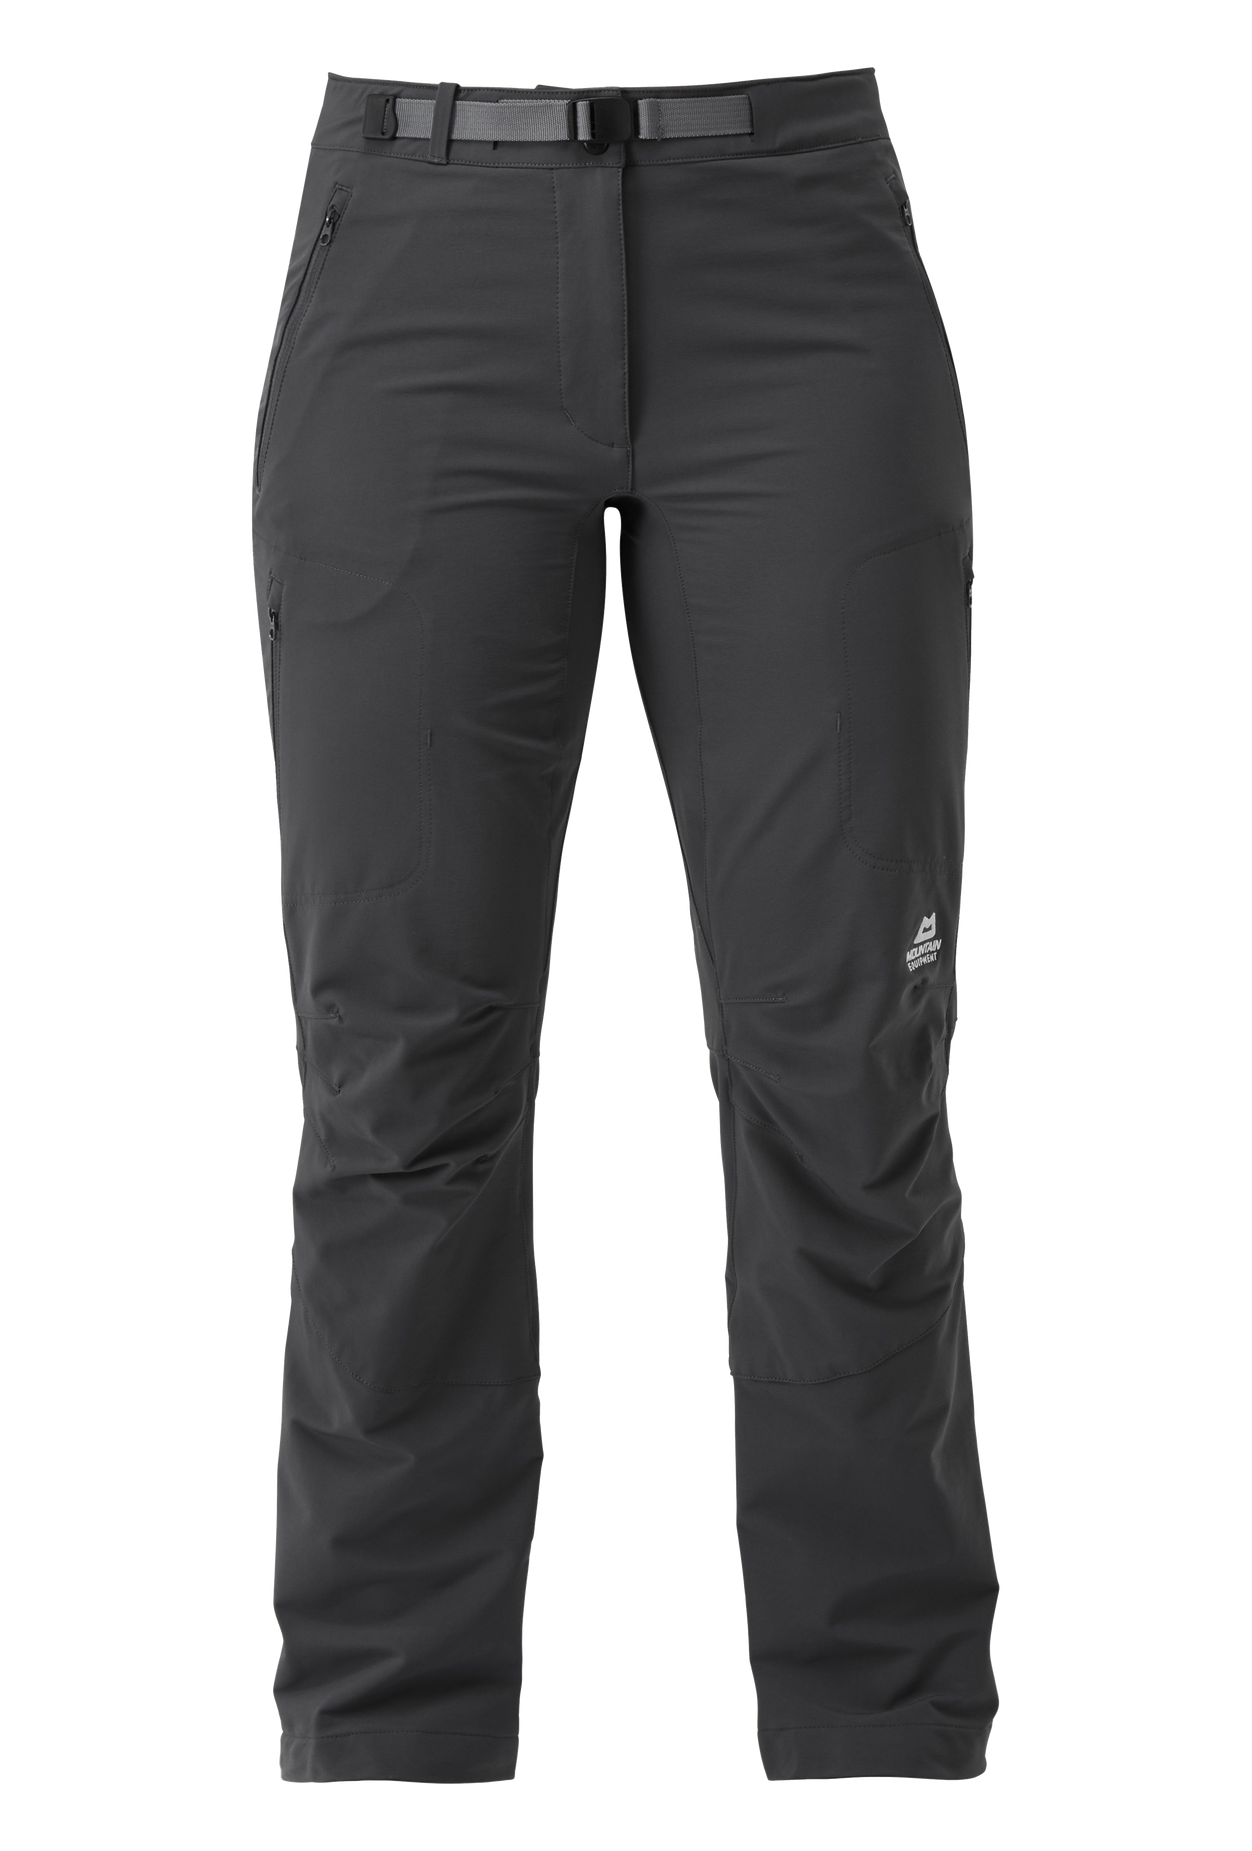 Mountain Equipment dámské softshellové kalhoty Chamois Wmns Pant - zkrácené Barva: Anvil Grey, Velikost: 14/L